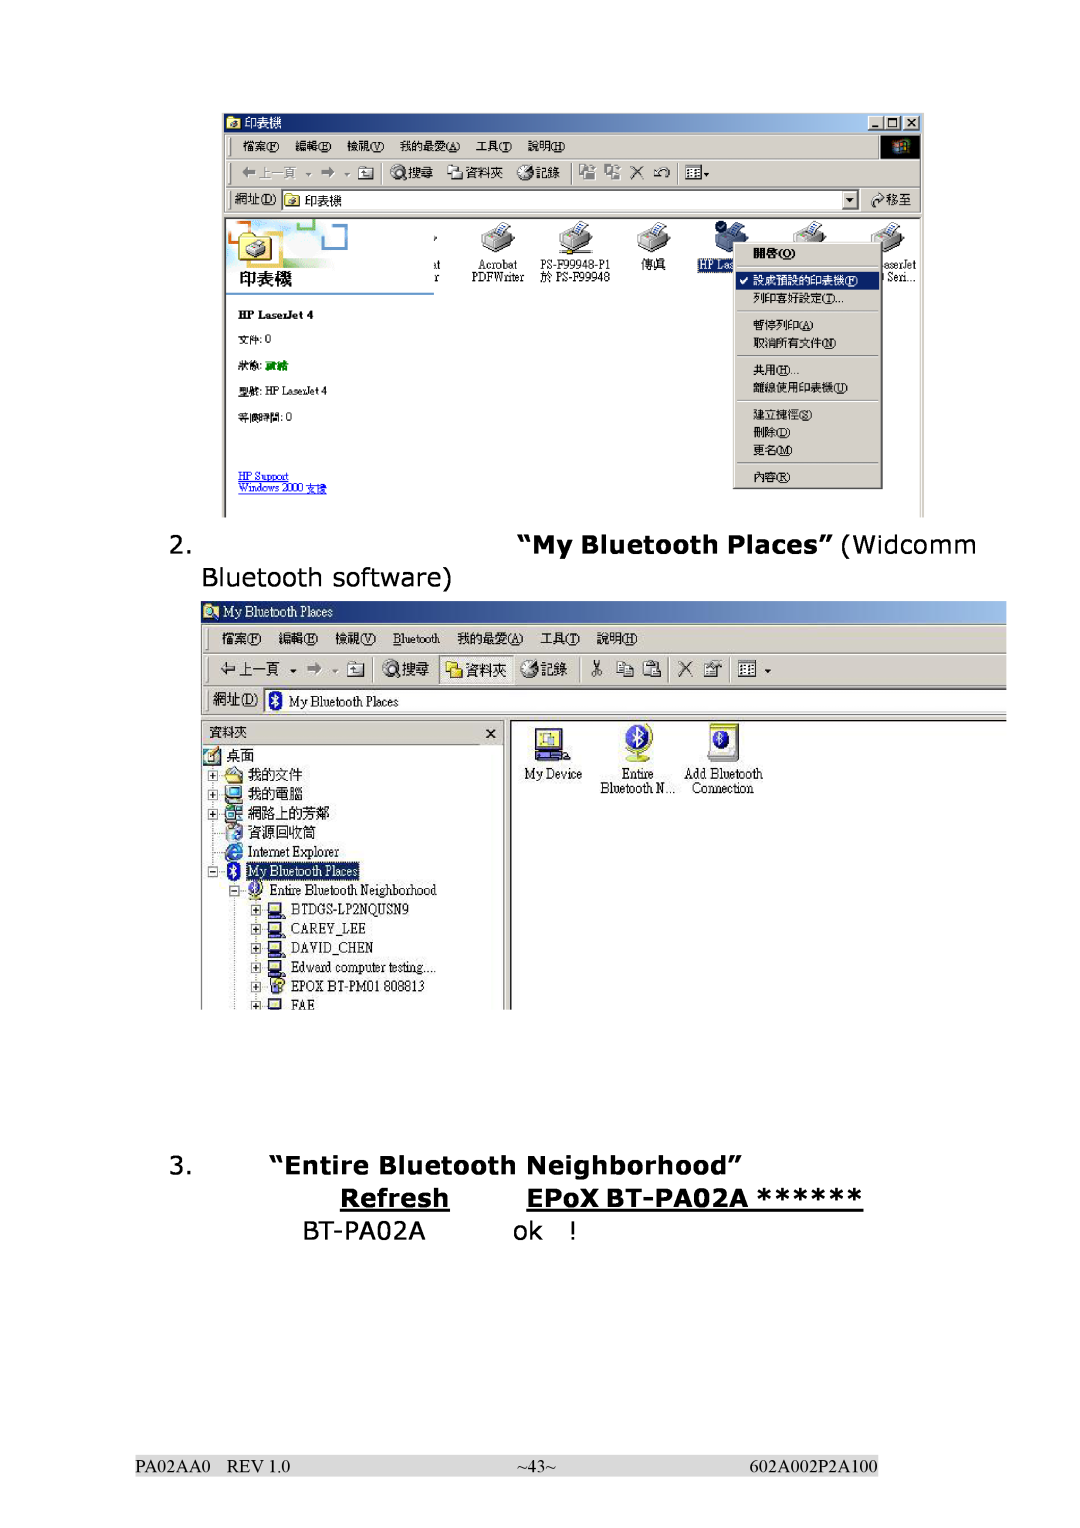 EPoX Computer manual 2. “My Bluetooth Places” Widcomm Bluetooth software, BT-PA02A ok, PA02AA0 REV, ~43~, 602A002P2A100 